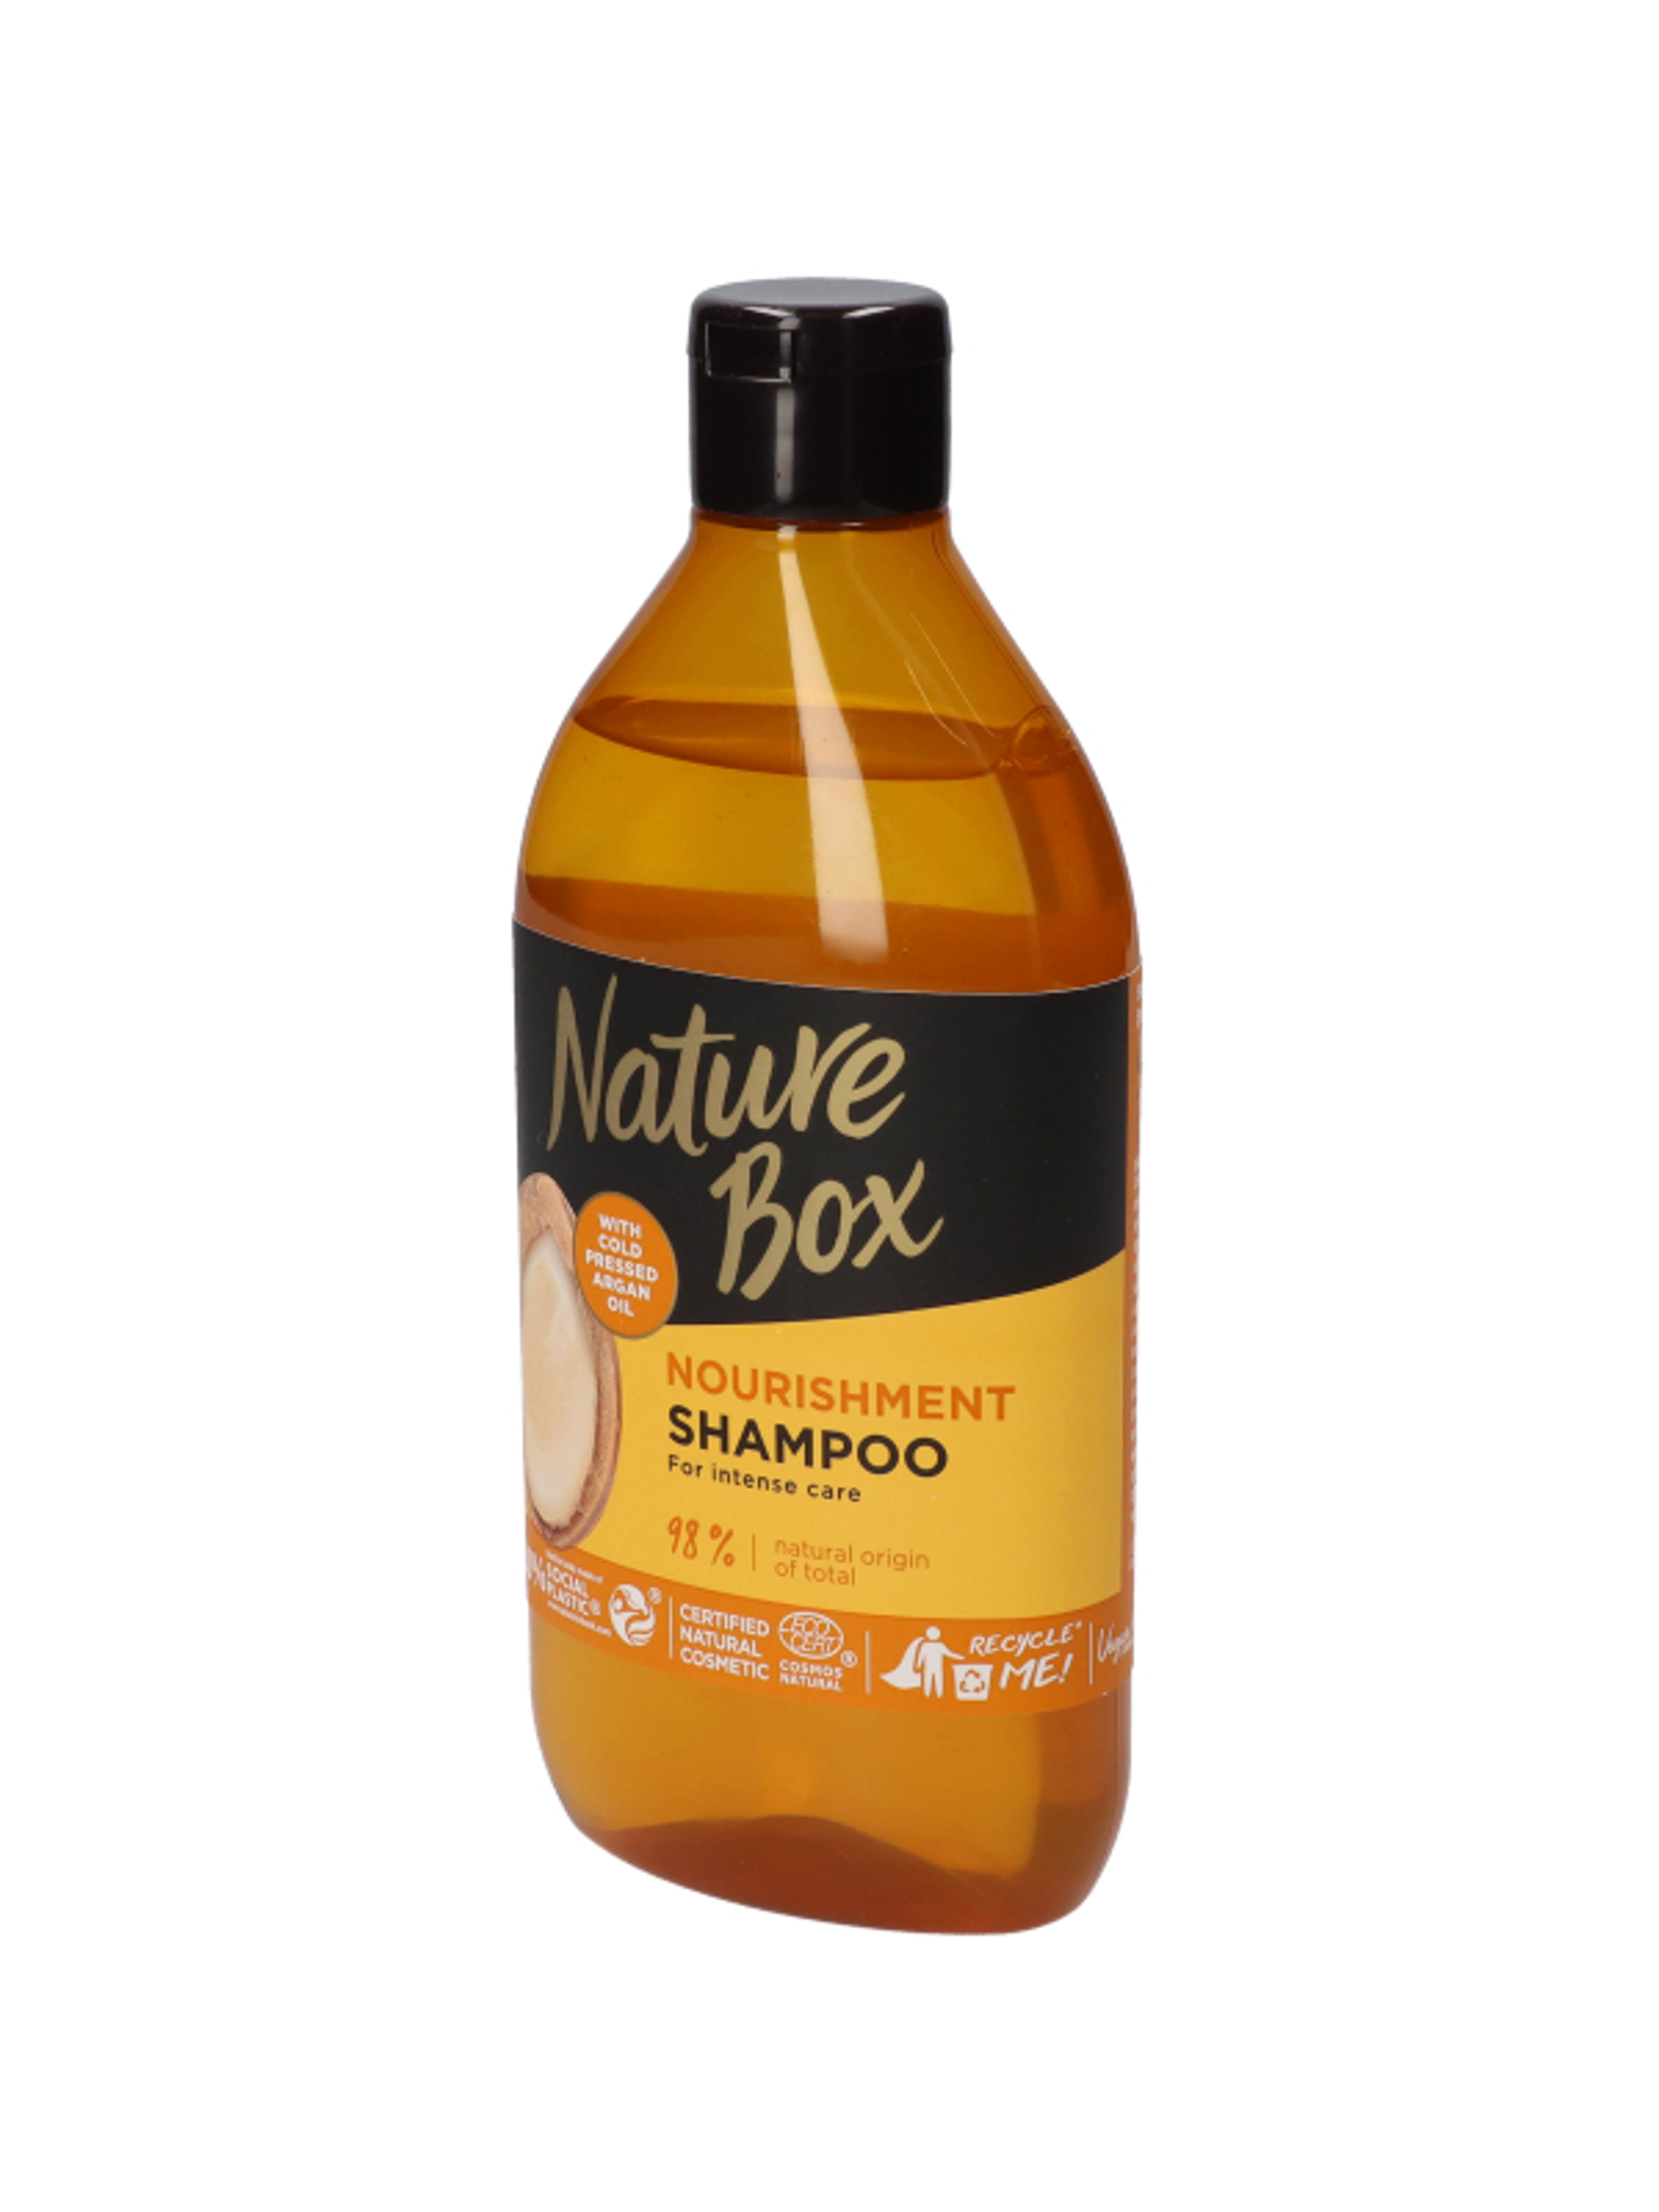 Nature Box sampon argán olajjal - 385 ml-3